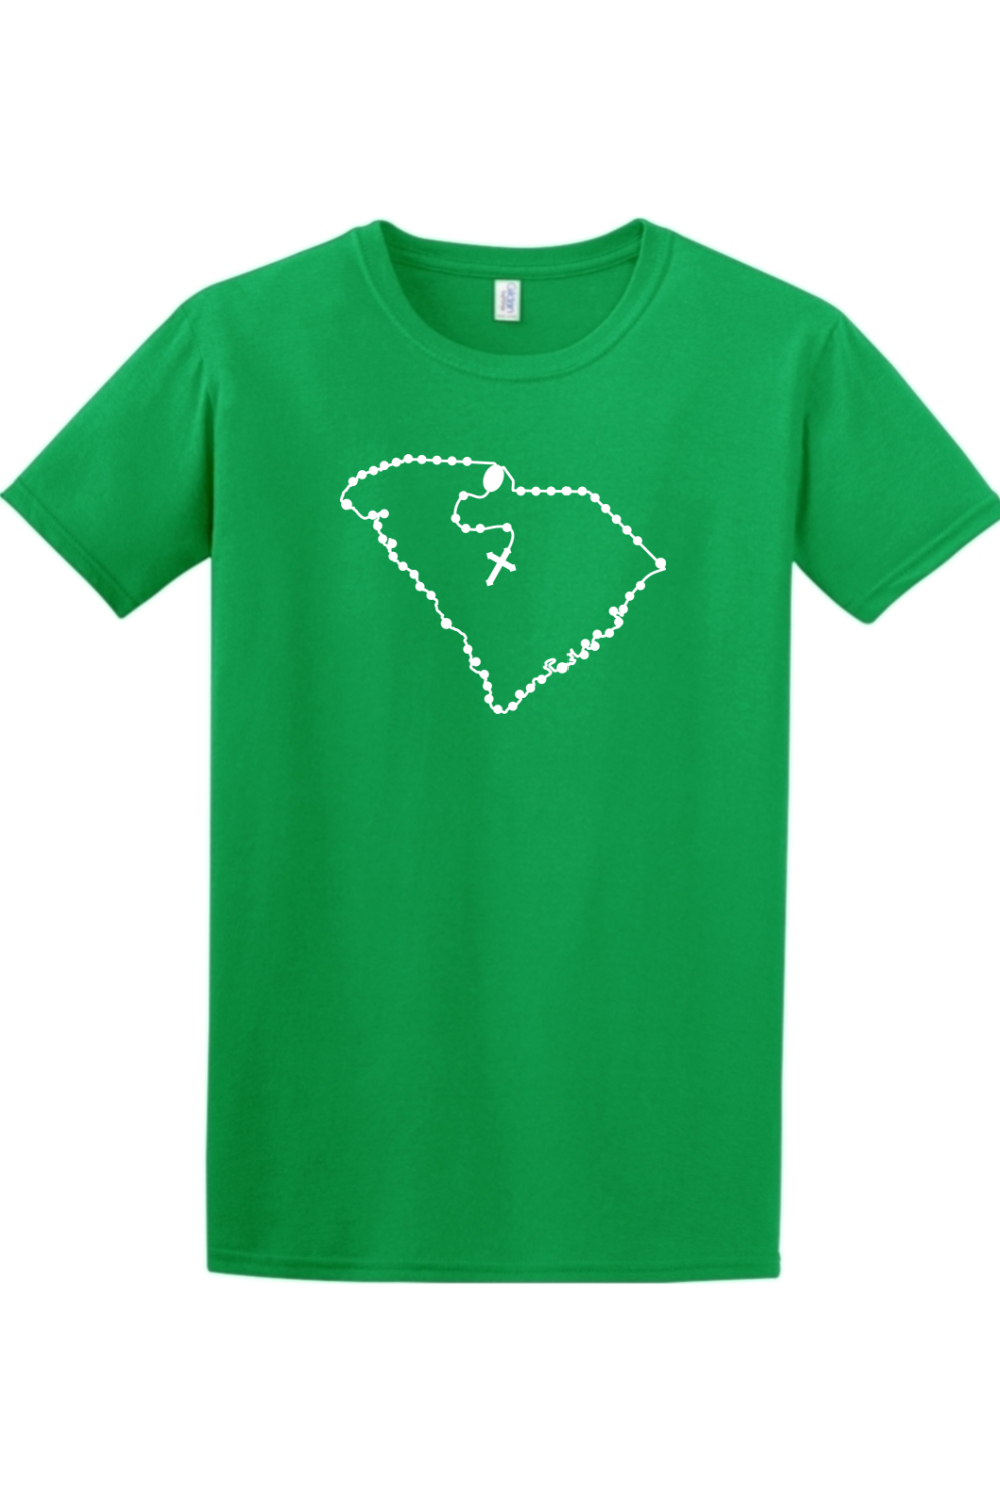 South Carolina Rosary Adult T-shirt